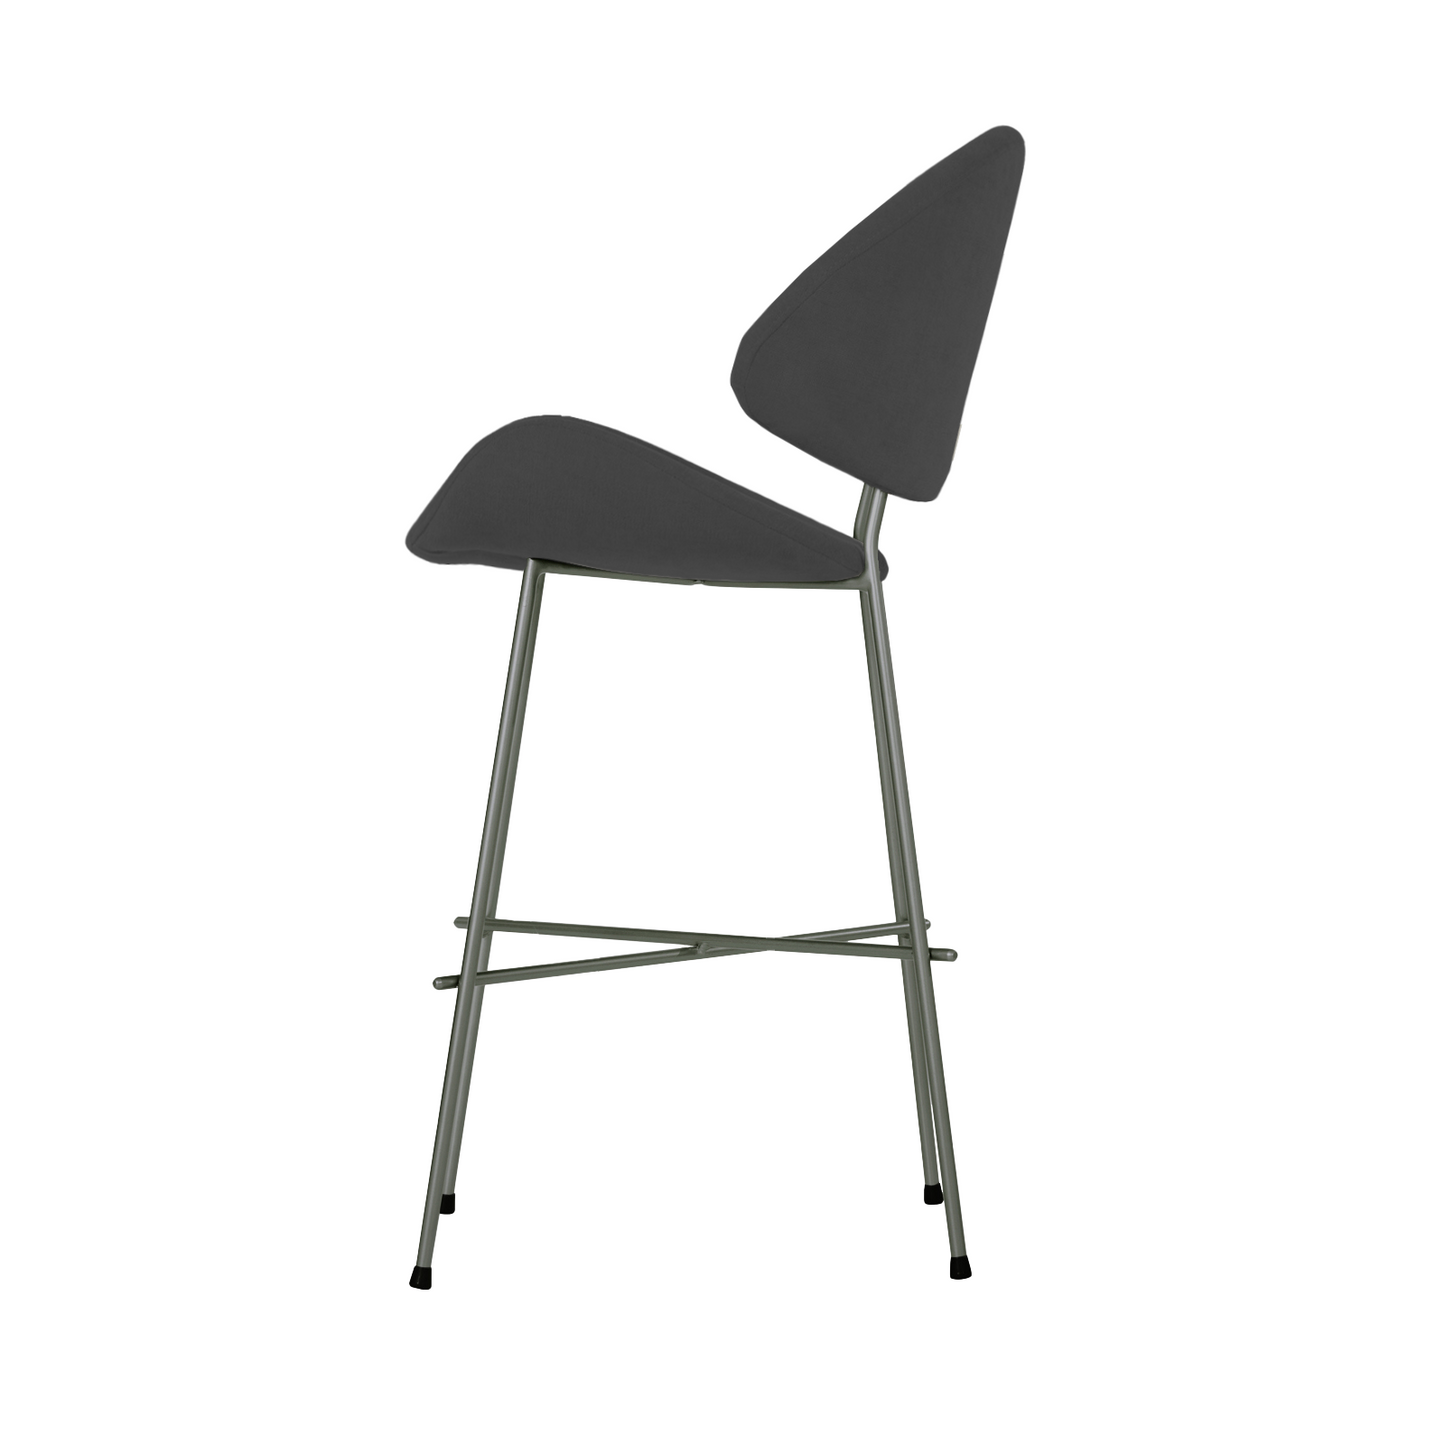 Bar stool Cheri Bar Trend Low - Dark Grey